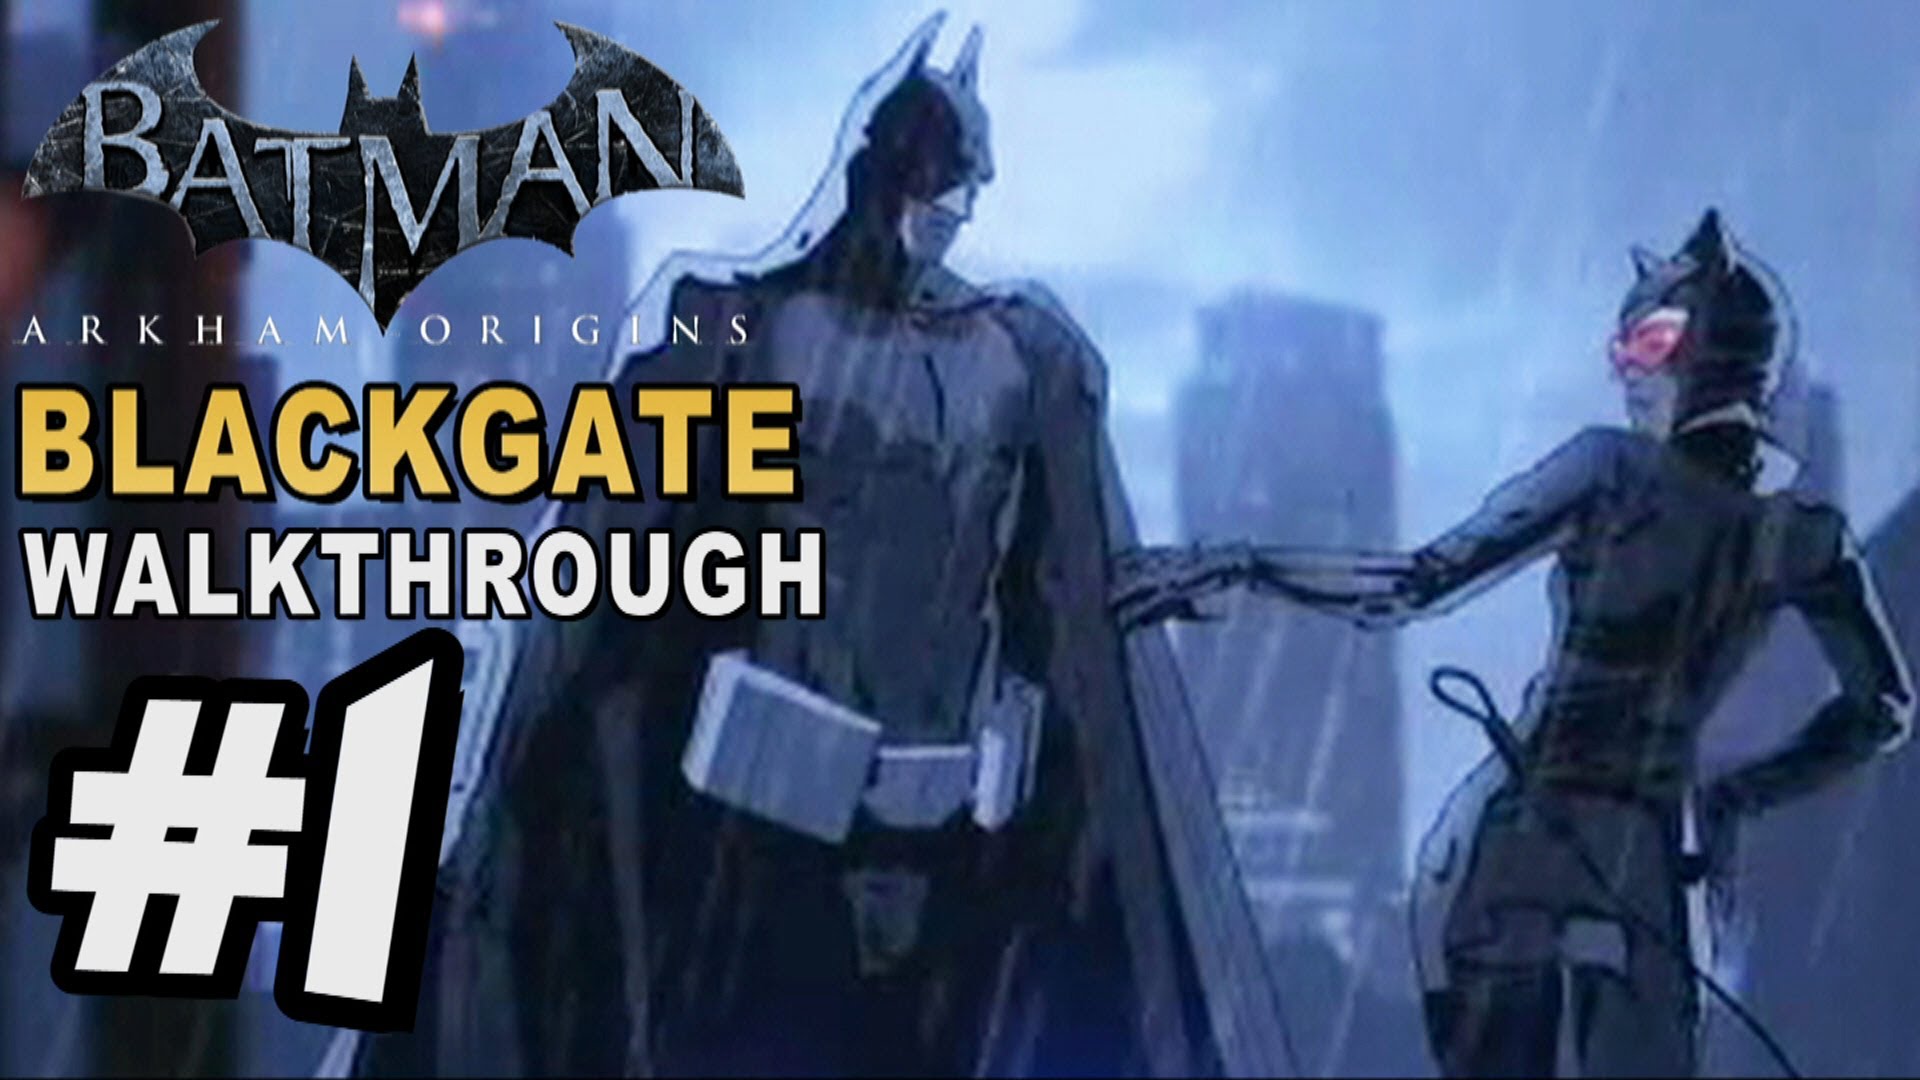 Batman vita. Бэтмен: летопись Аркхема Блэкгейт (2013). Batman Arkham Origins Blackgate PS Vita. Batman: Arkham Origins Blackgate (2014). Batman Arkham Blackgate 3ds.